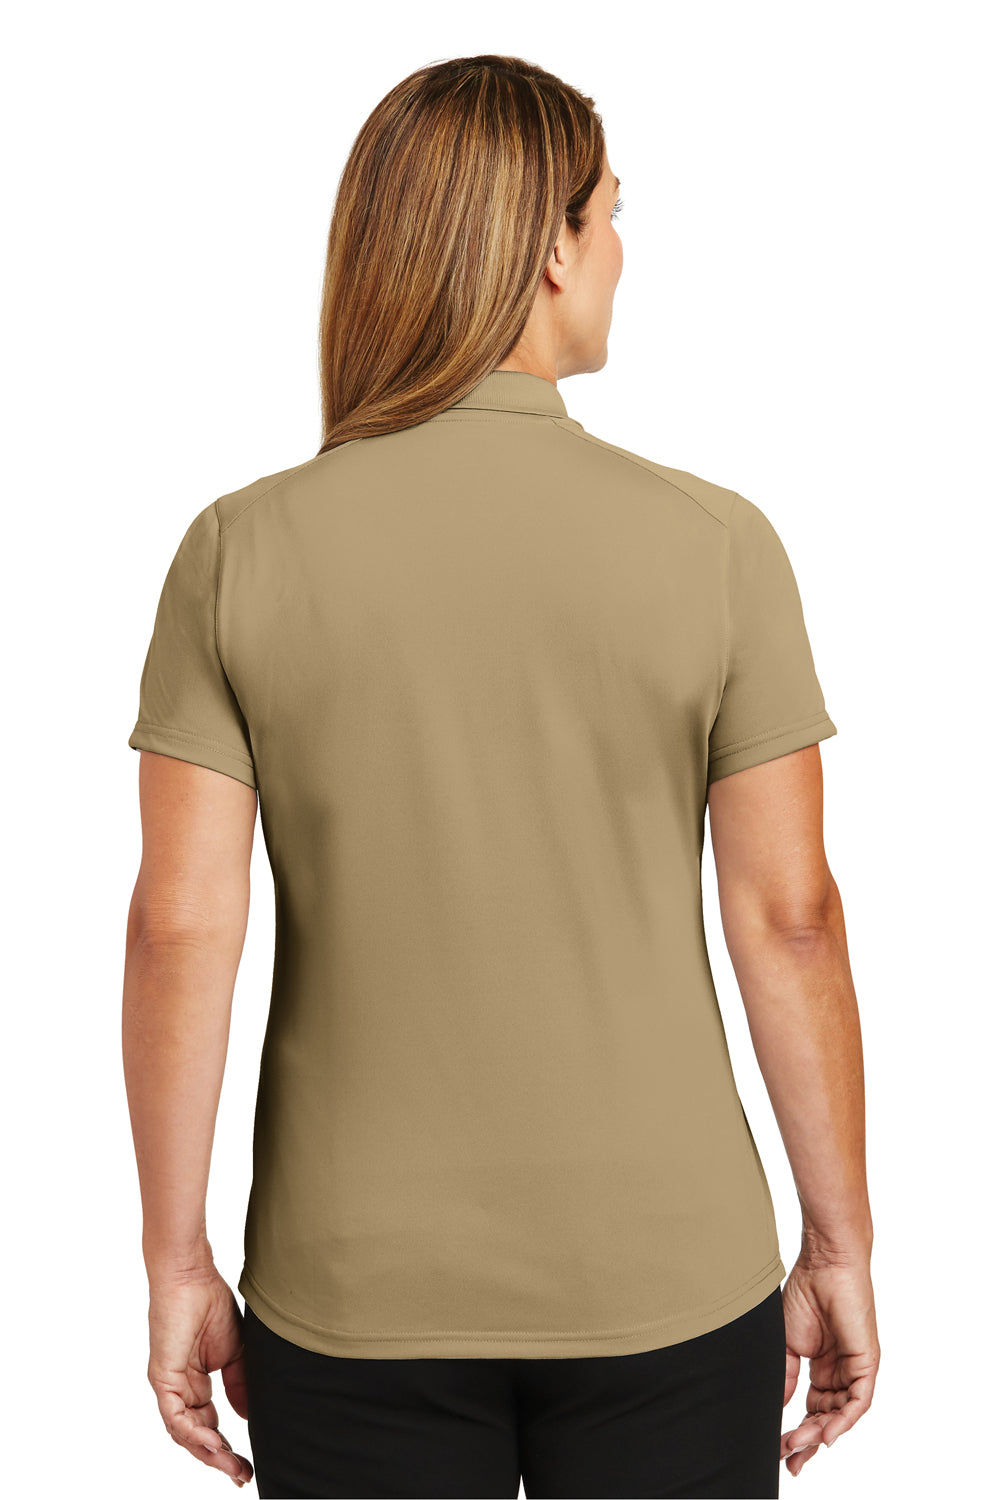 CornerStone CS419 Womens Select Moisture Wicking Short Sleeve Polo Shirt Tan Brown Back